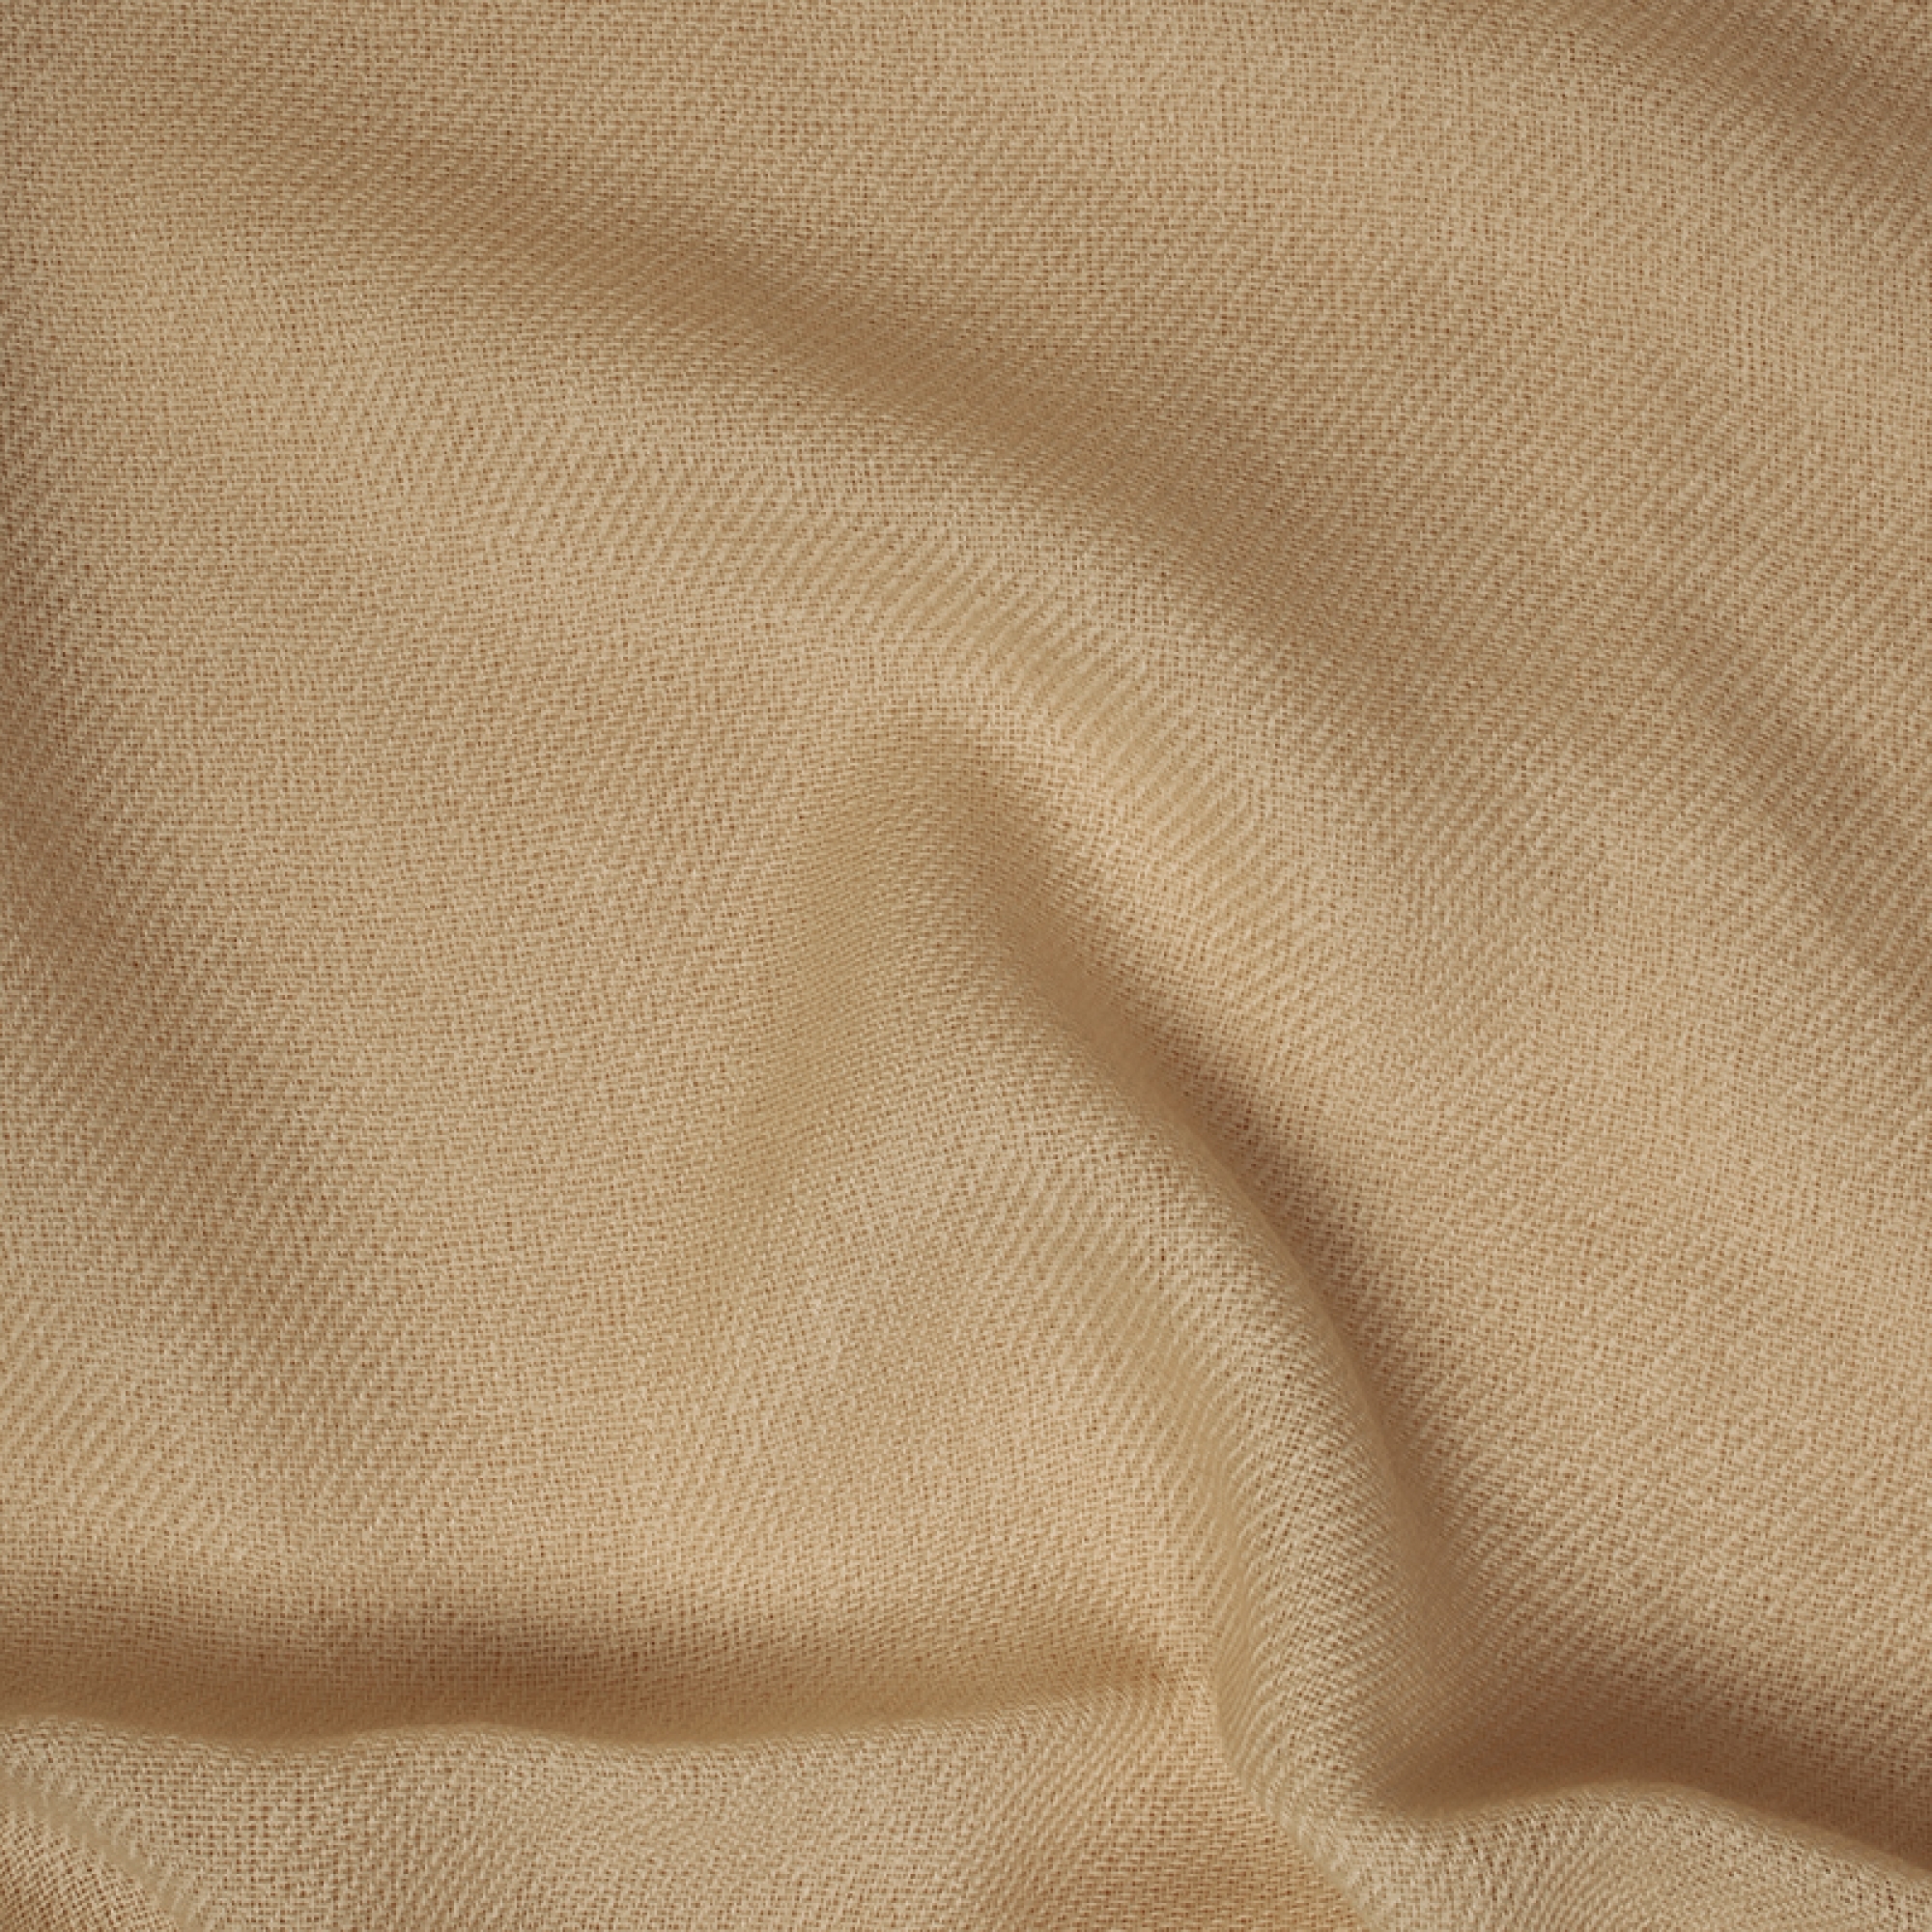 Cashmere accessories blanket toodoo plain xl 240 x 260 white smocke 240 x 260 cm